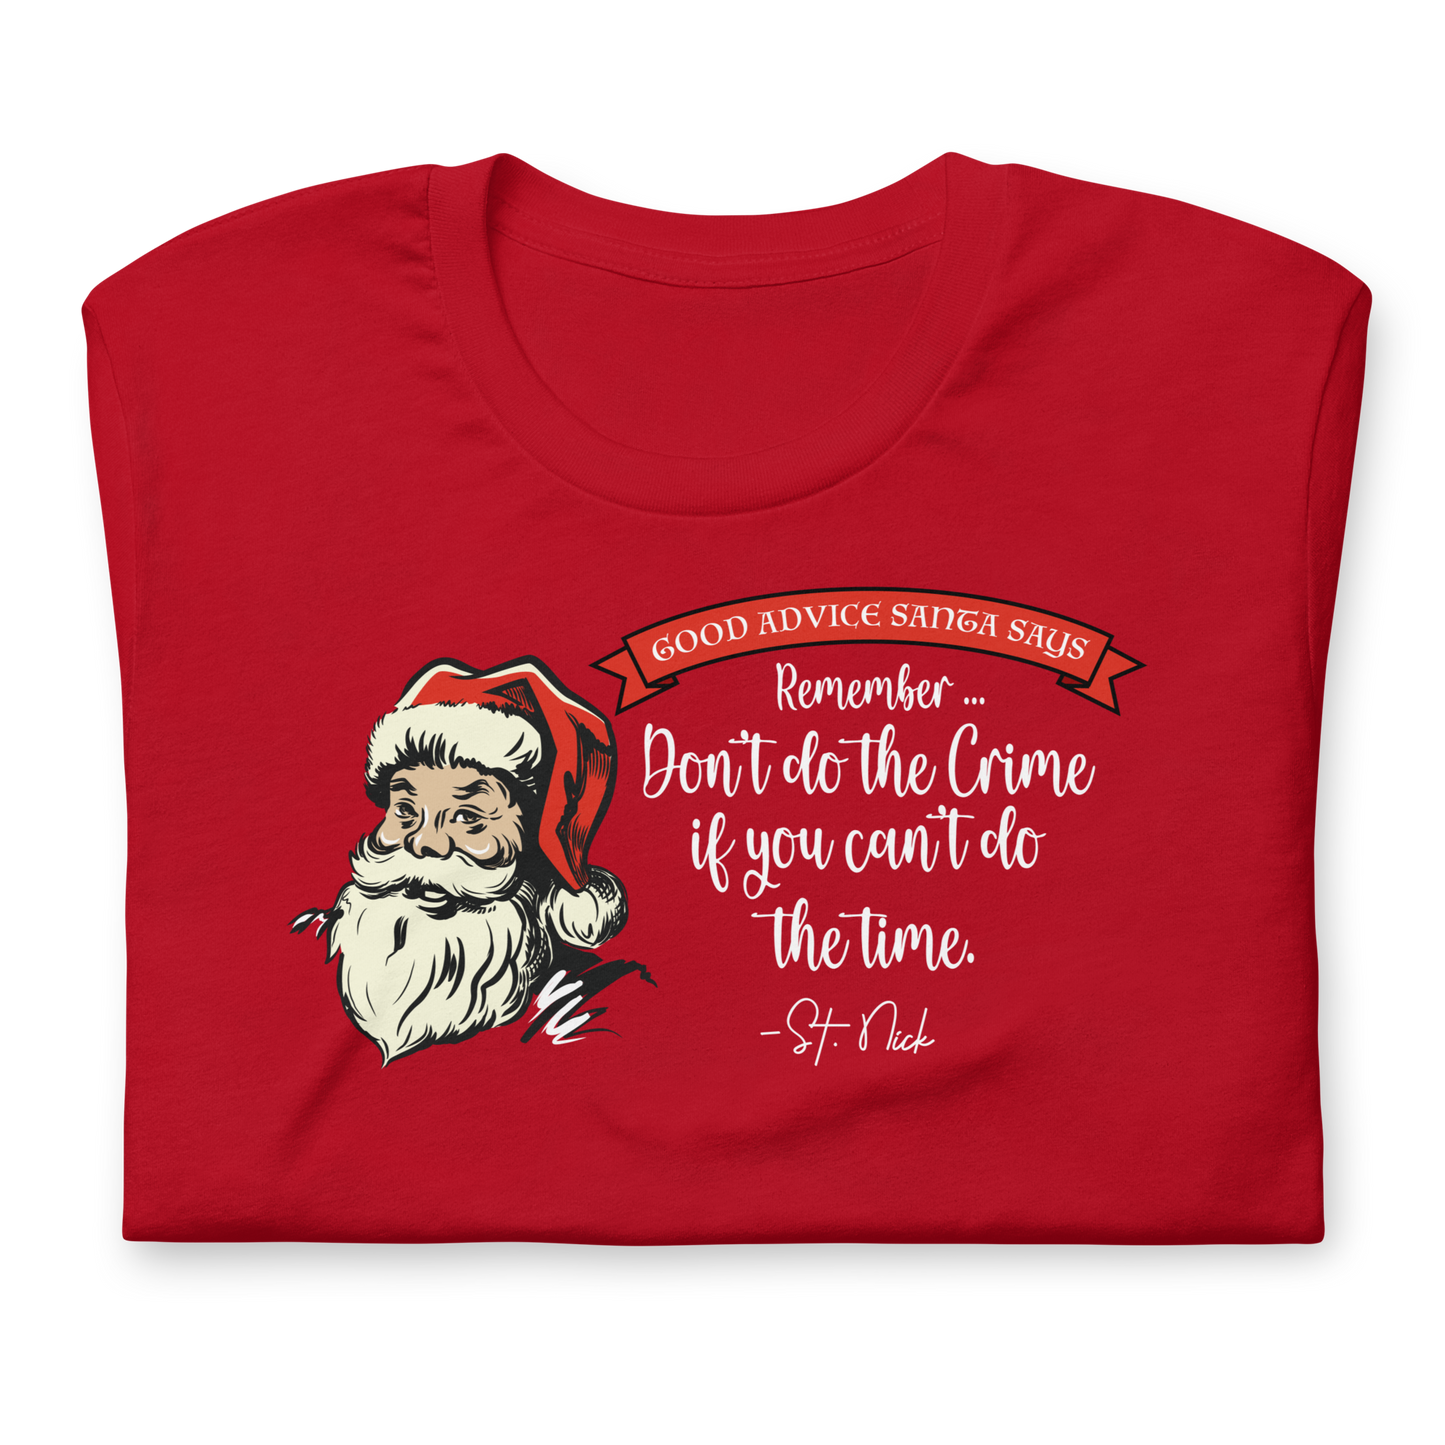 CHRISTMAS - Good Advice Santa Says: Don't do the crime ... - Funny t-shirt